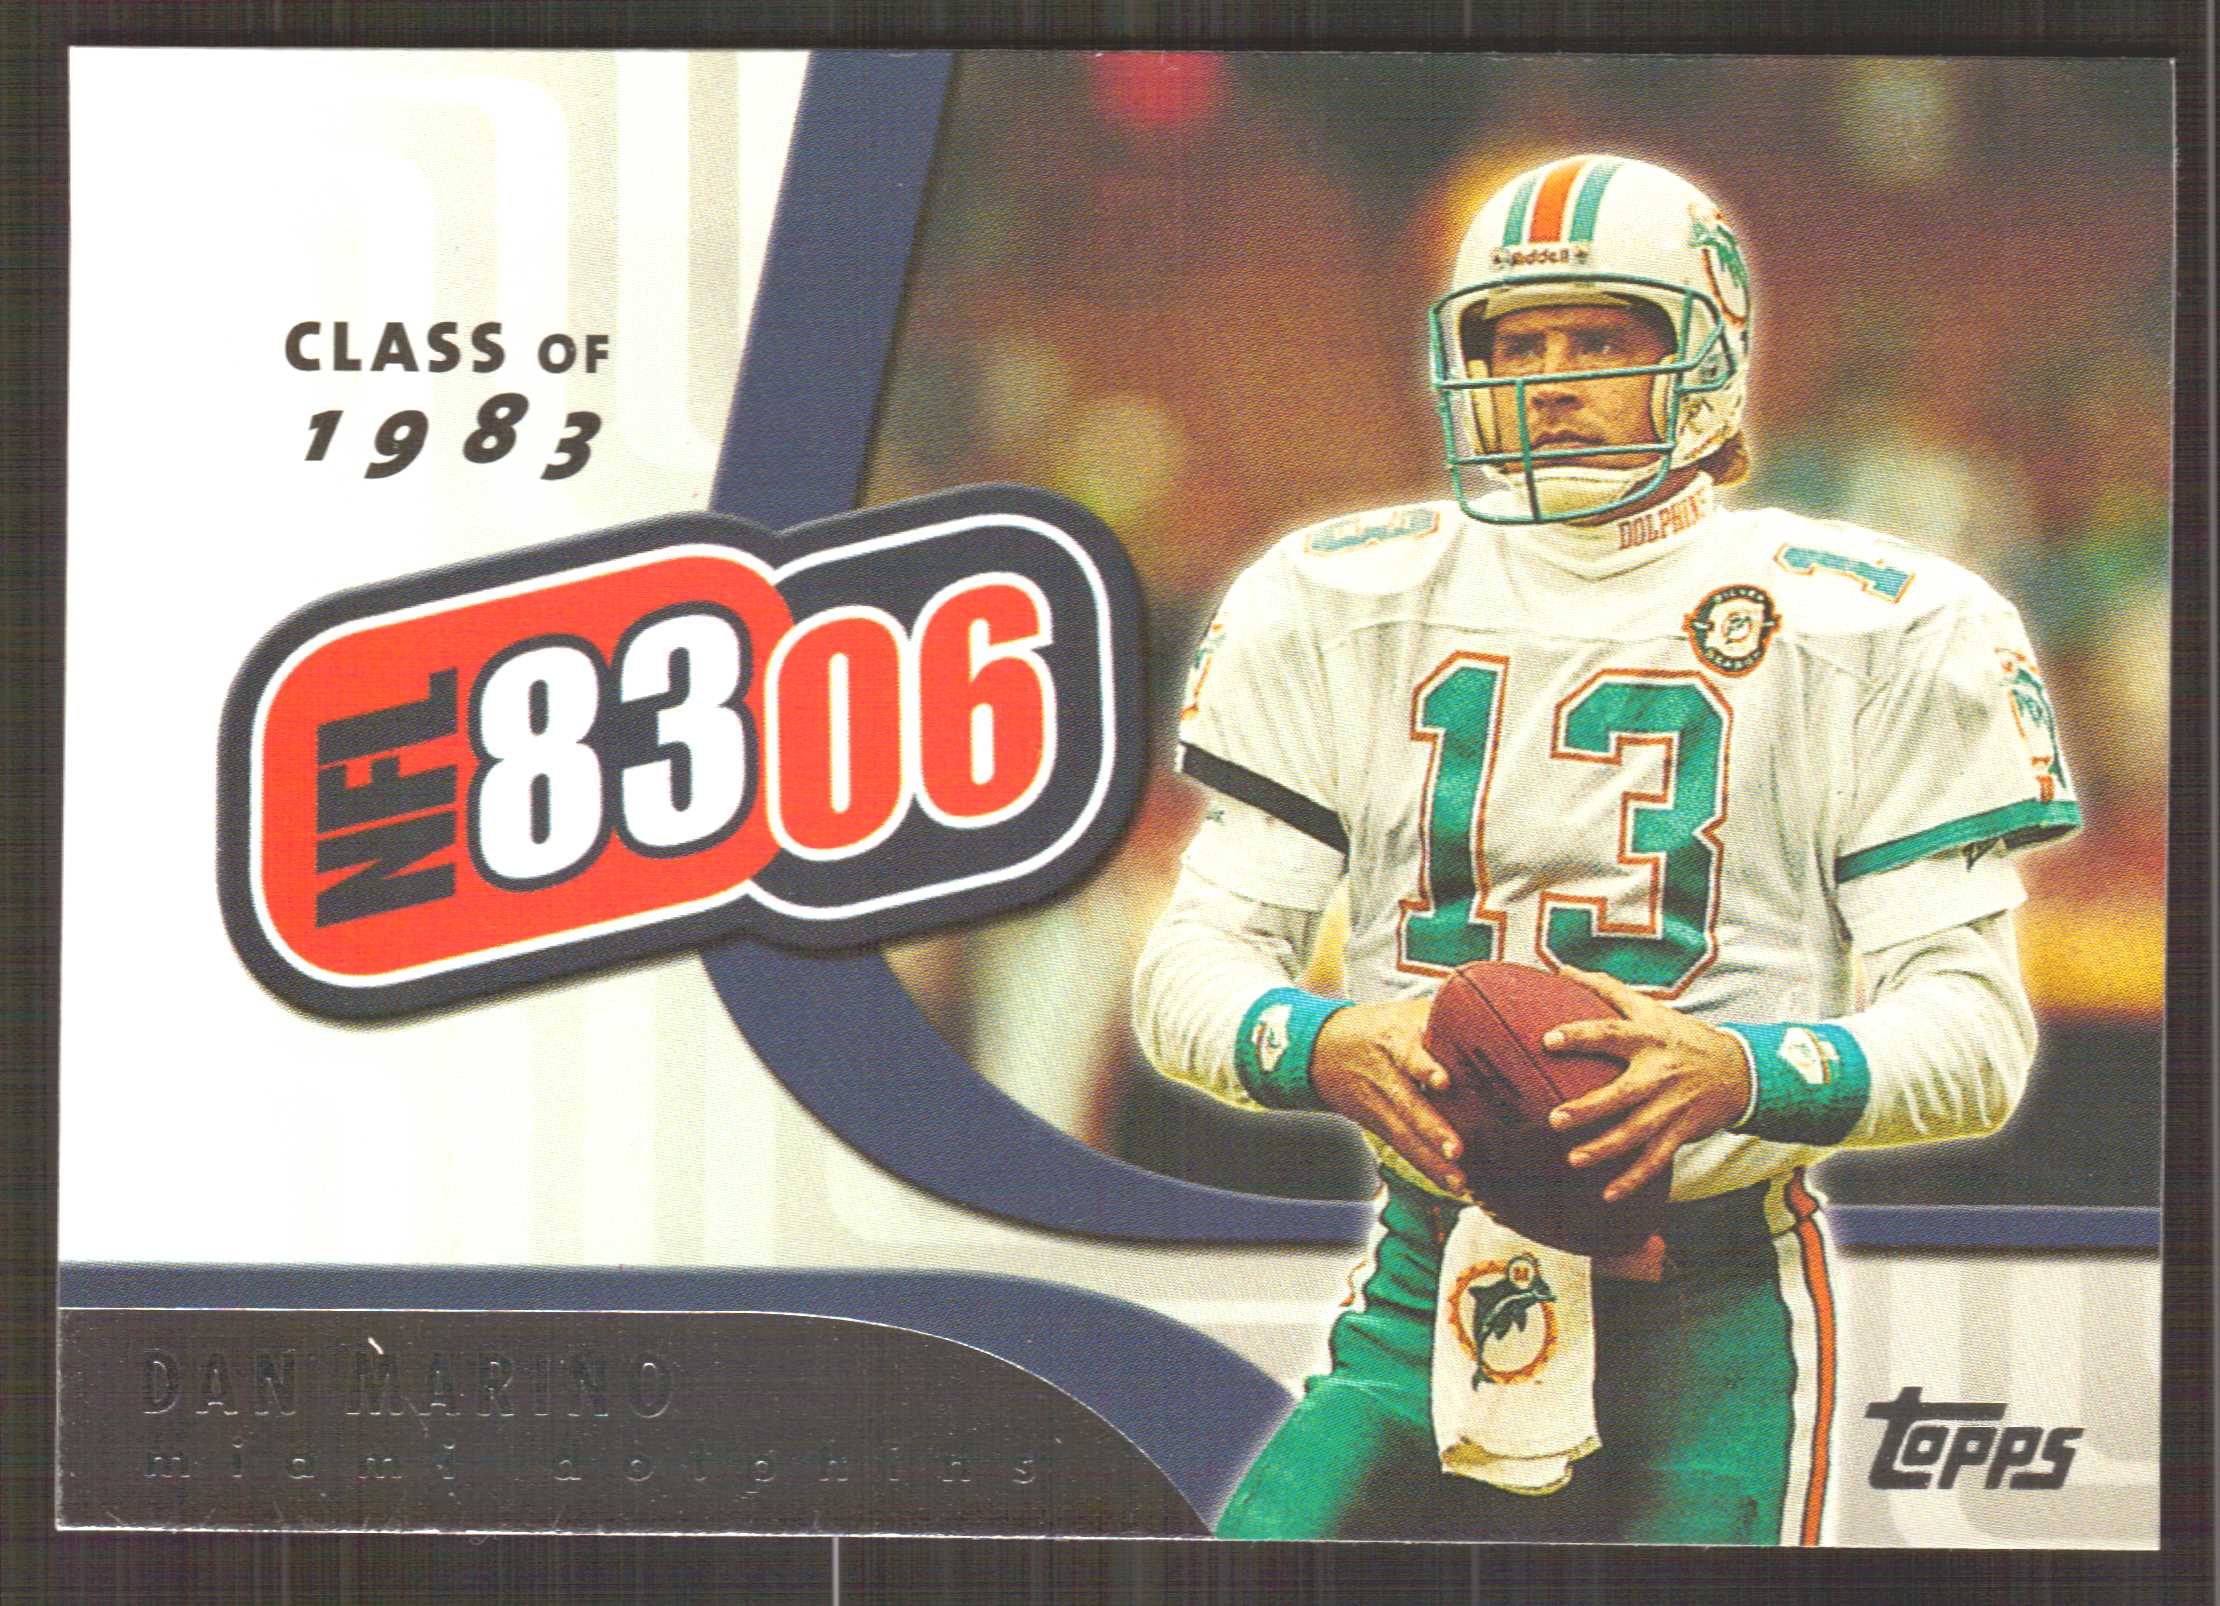 2006 Topps NFL 8306 #NFL4 Dan Marino